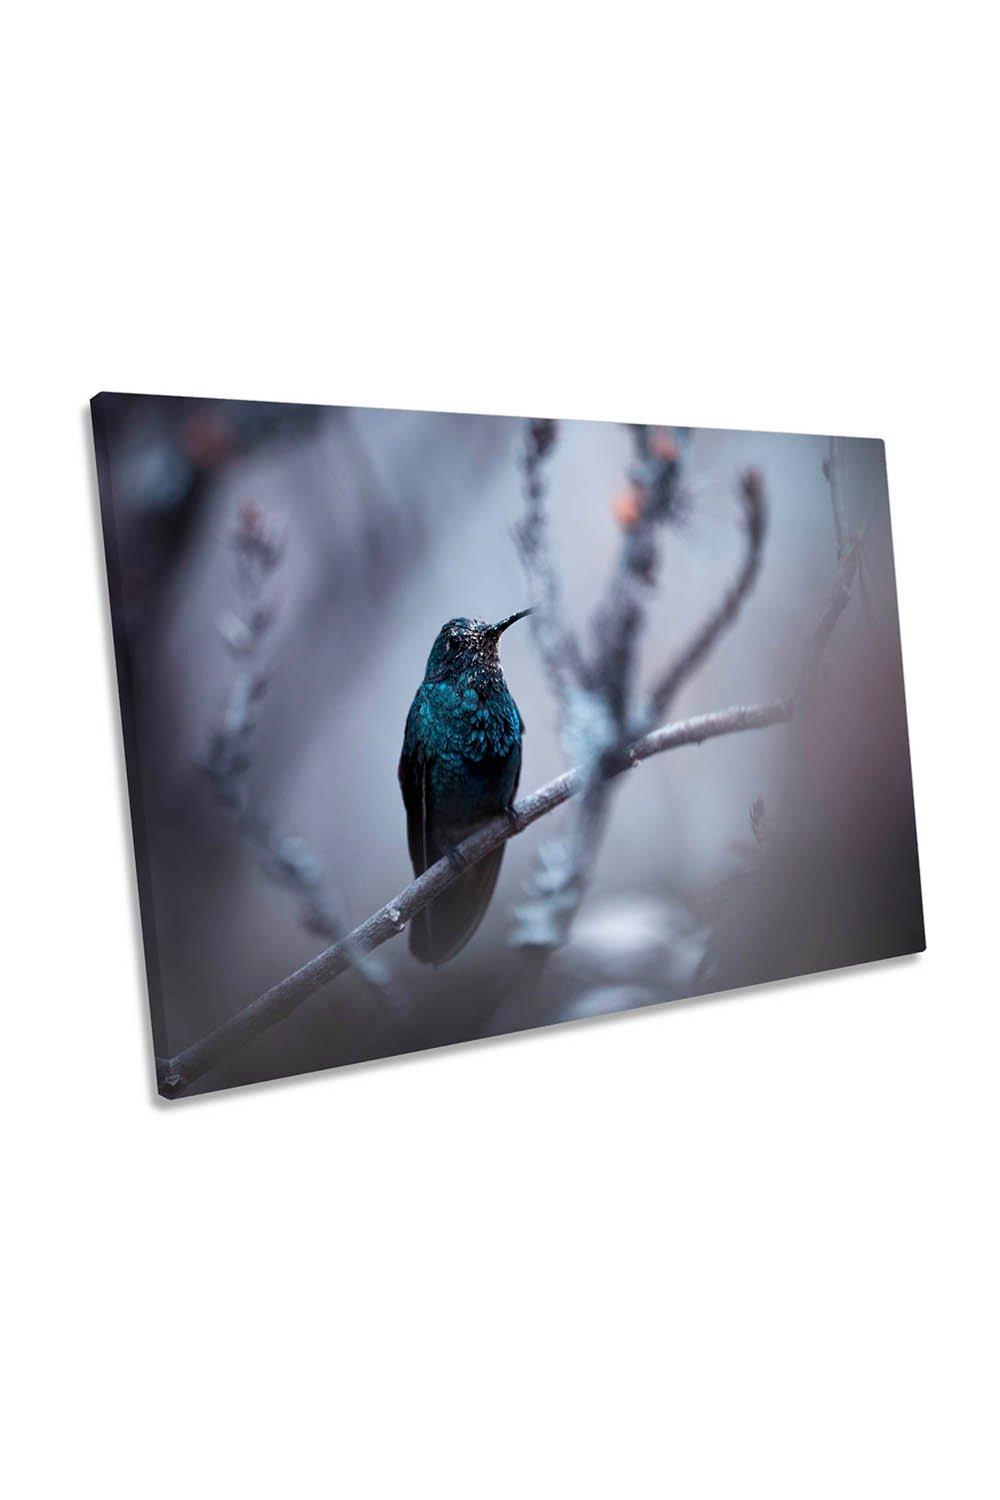 Electric Blue Hummingbird Wildlife Canvas Wall Art Picture Print